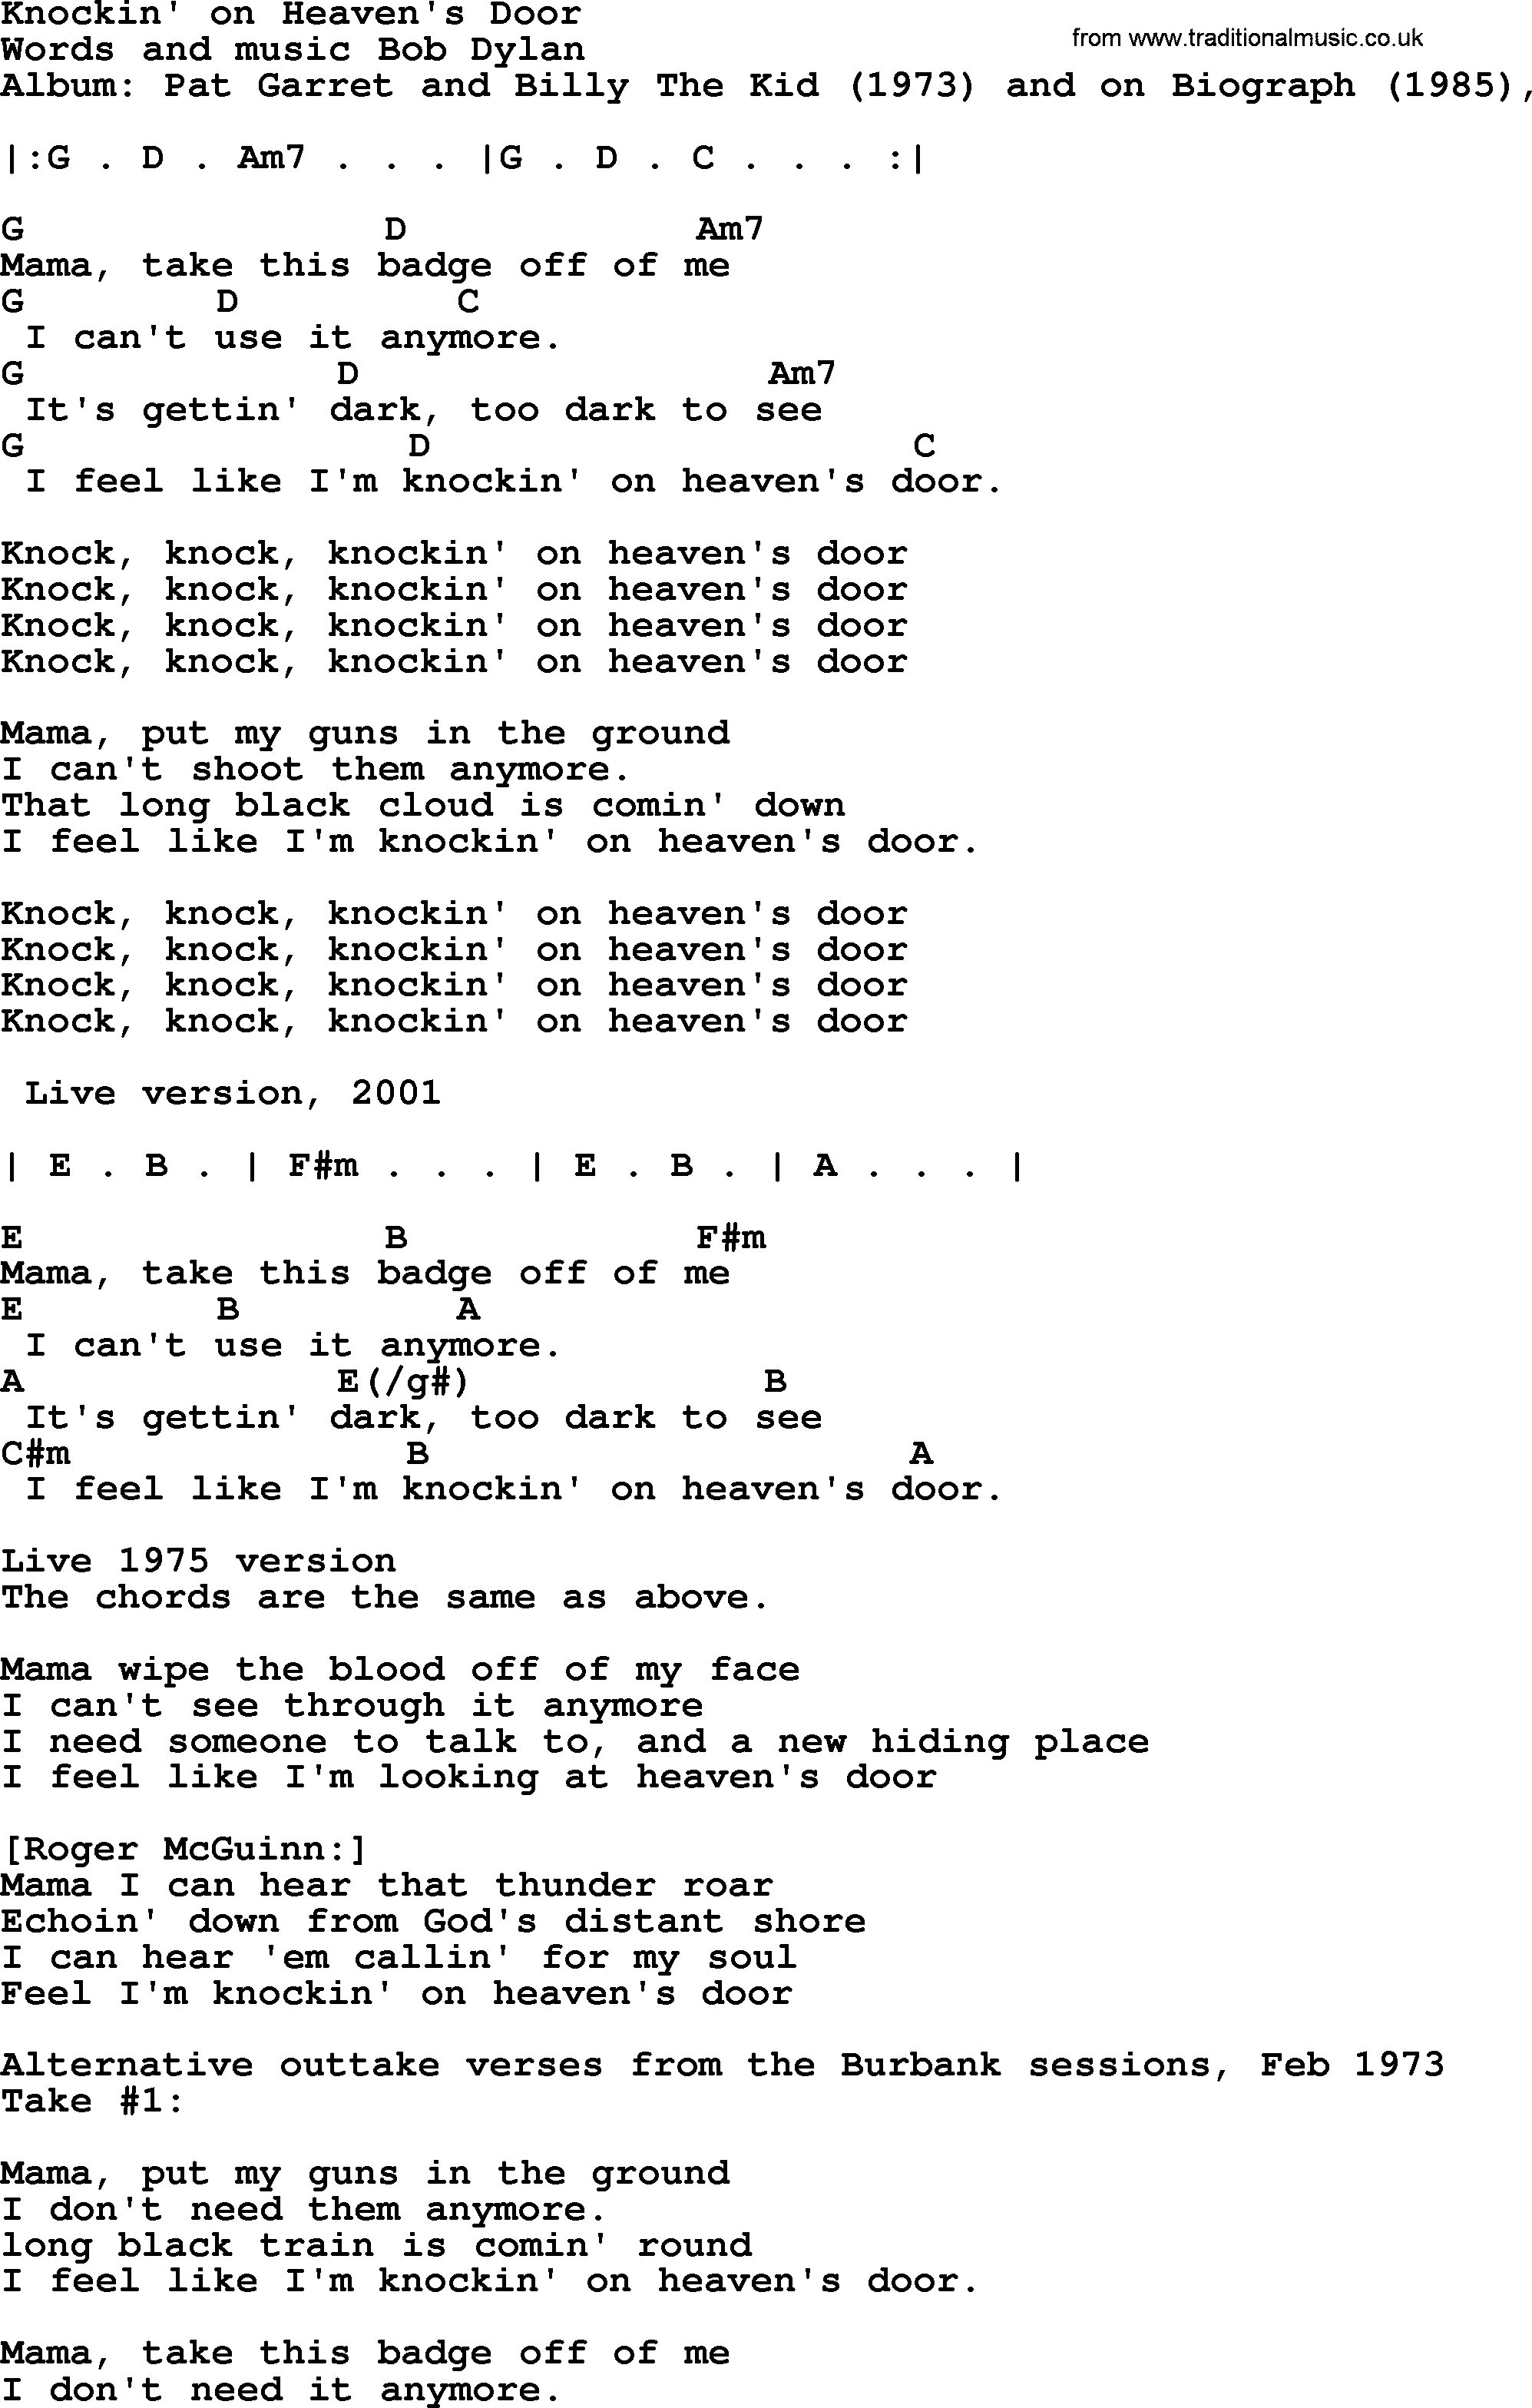 Bob Dylan song, lyrics with chords - Knockin' on Heaven's Door